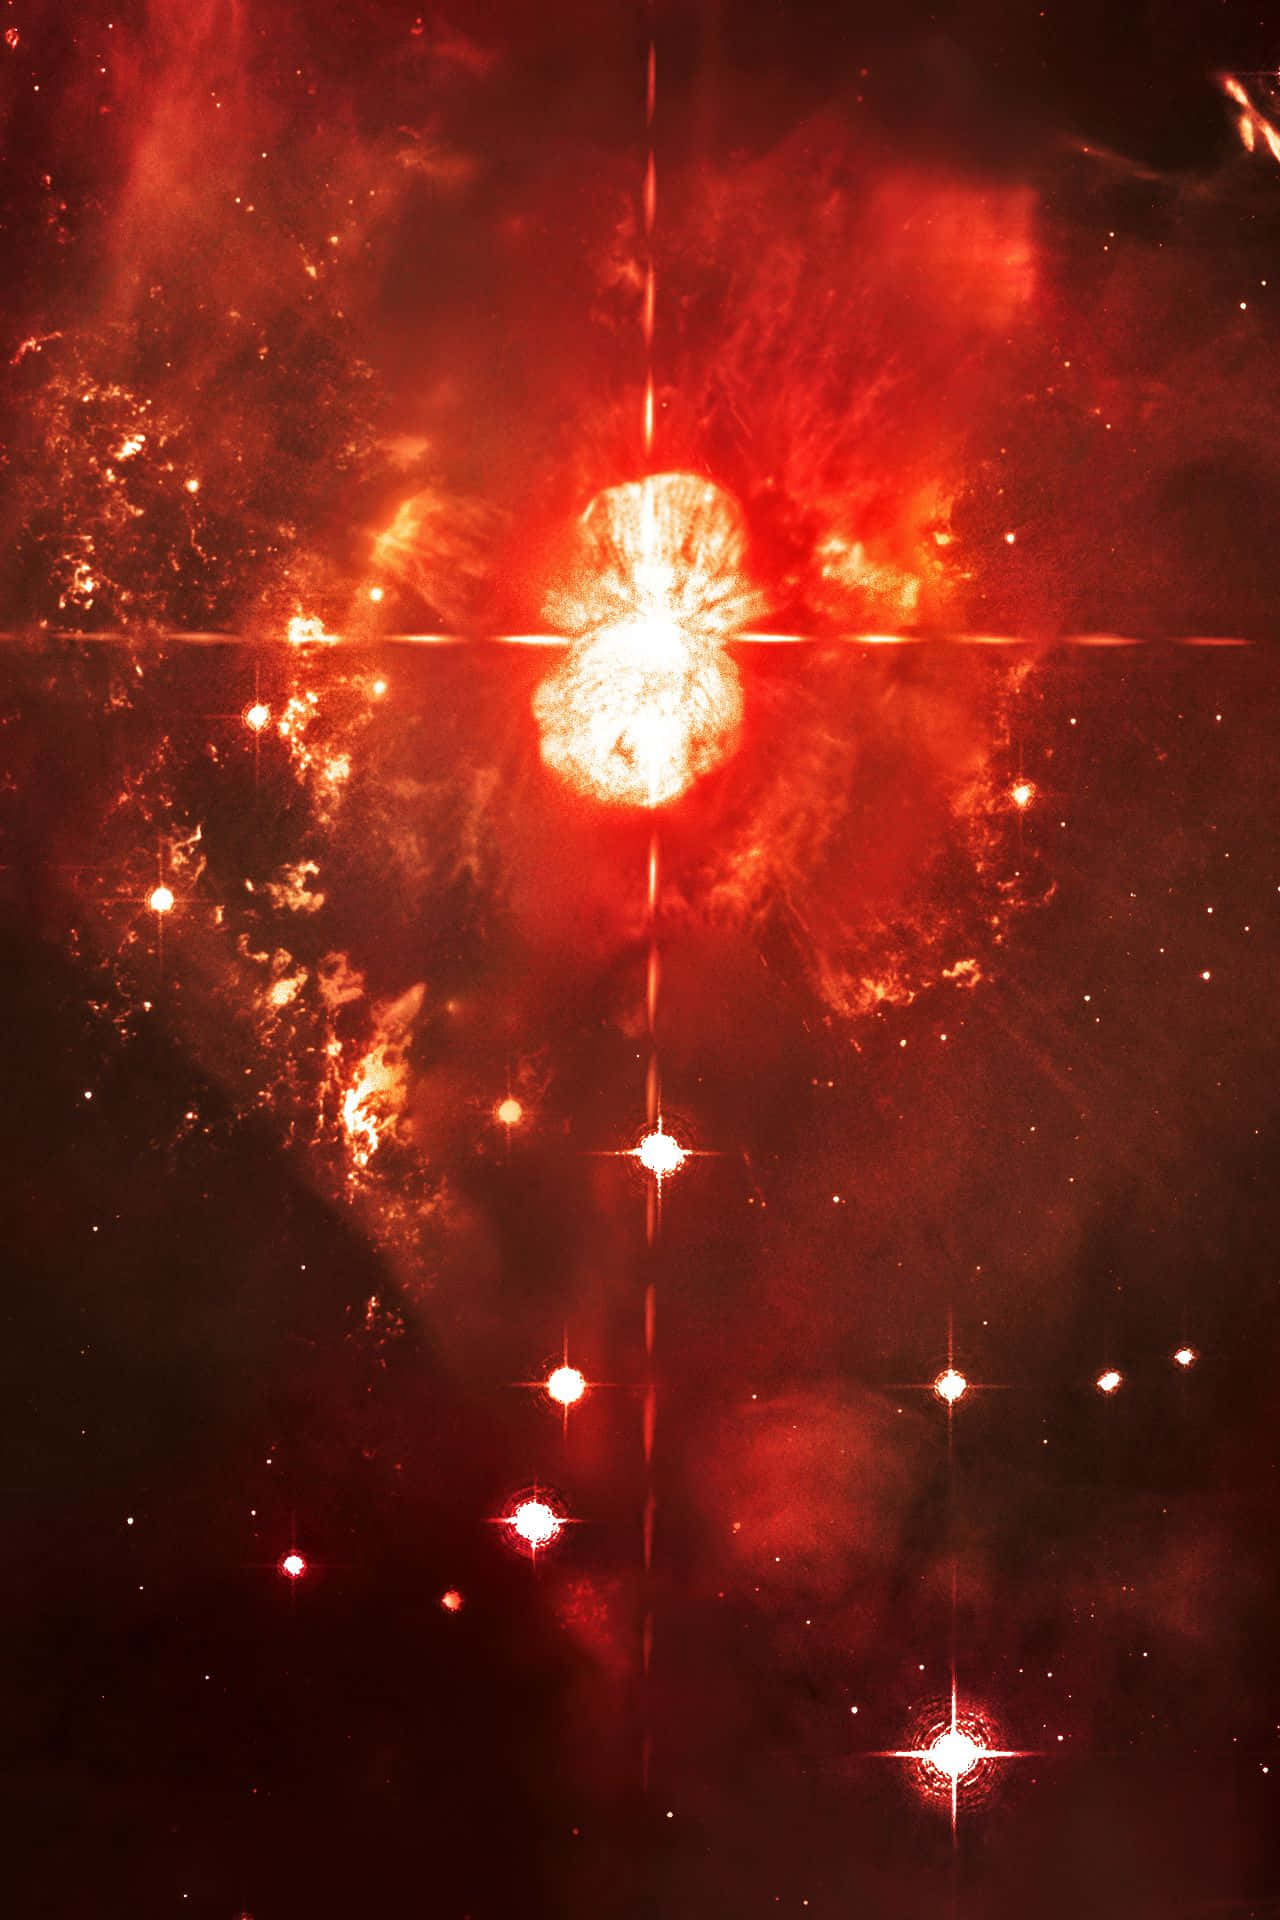 Stunning Quasar in Galaxy Wallpaper